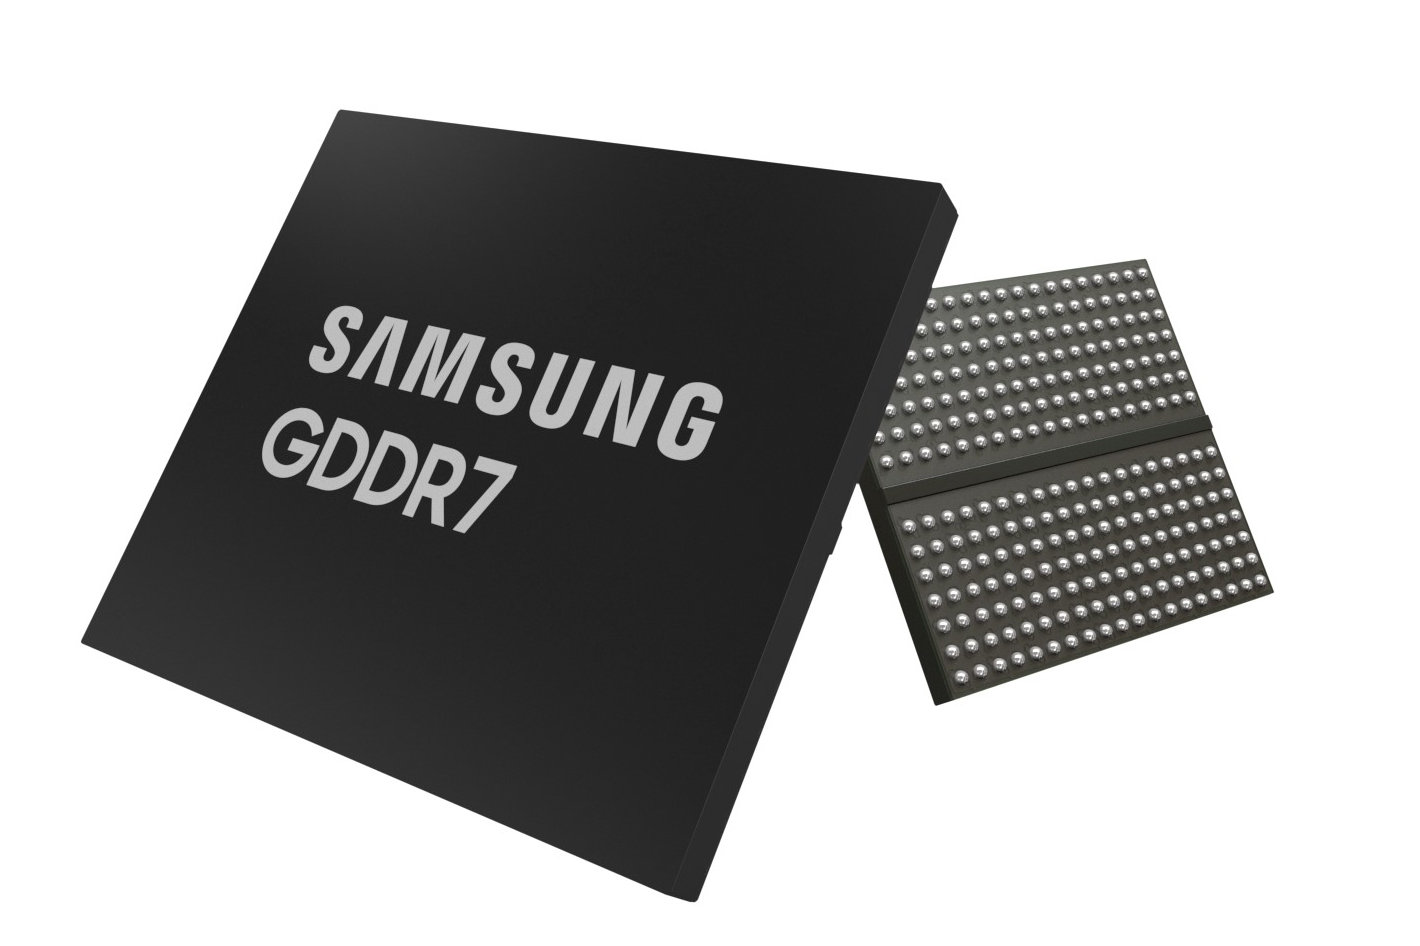 Samsung GDDR7 DRAM: faster memory for faster AI